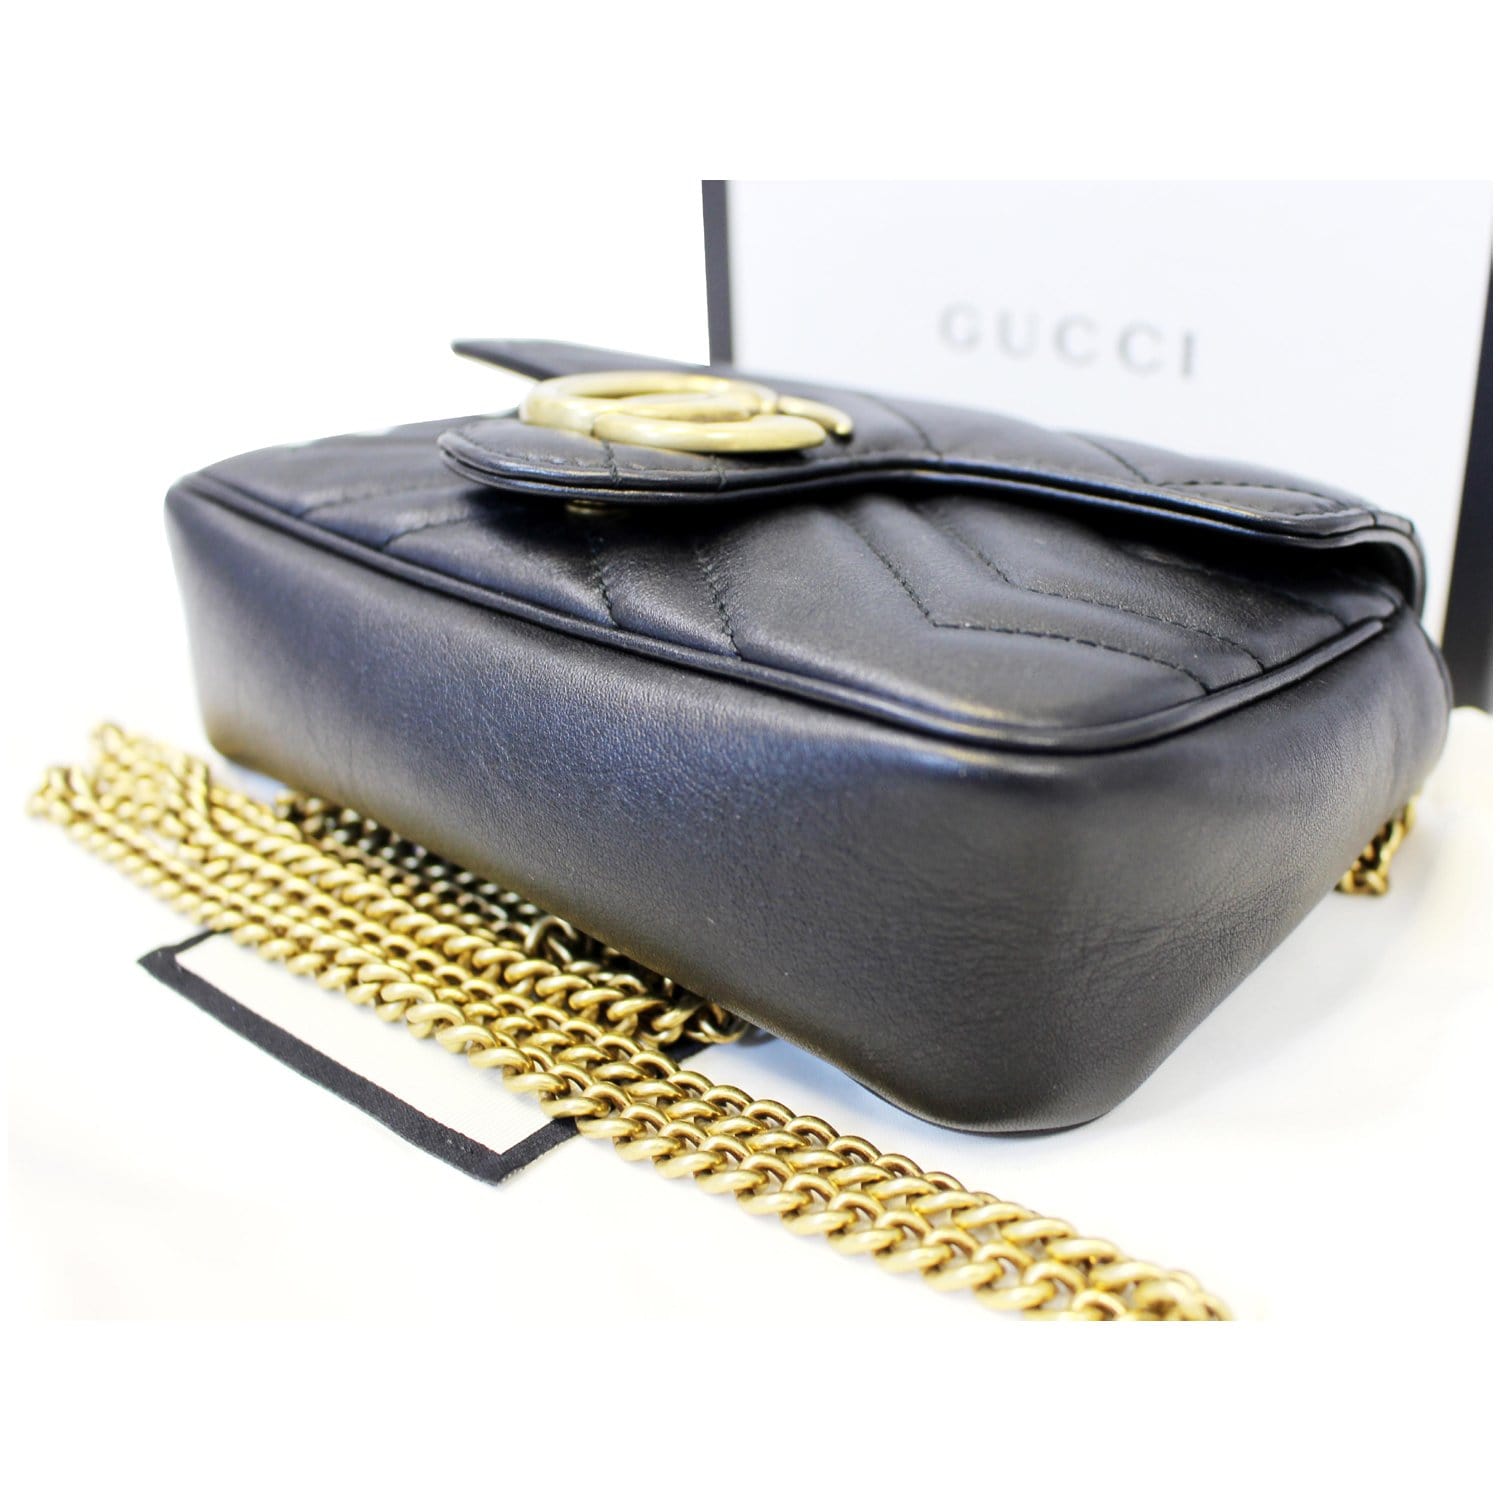 Gucci GG Marmont Matelasse Super Mini Bag Black